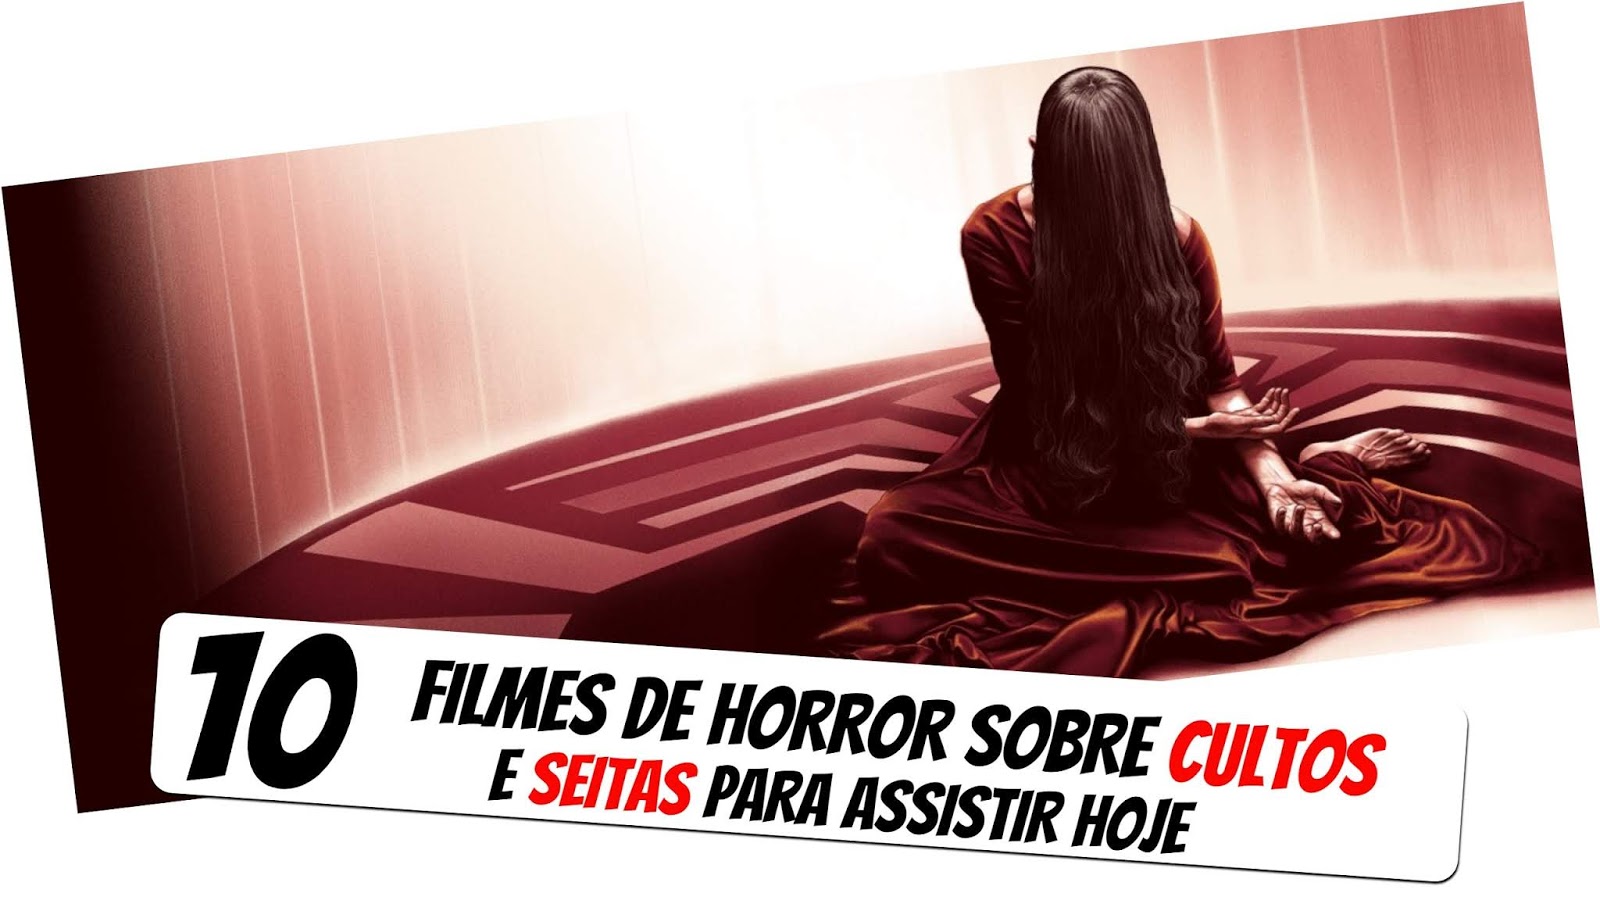 10-filmes-de-horror-cultos-e-seitas